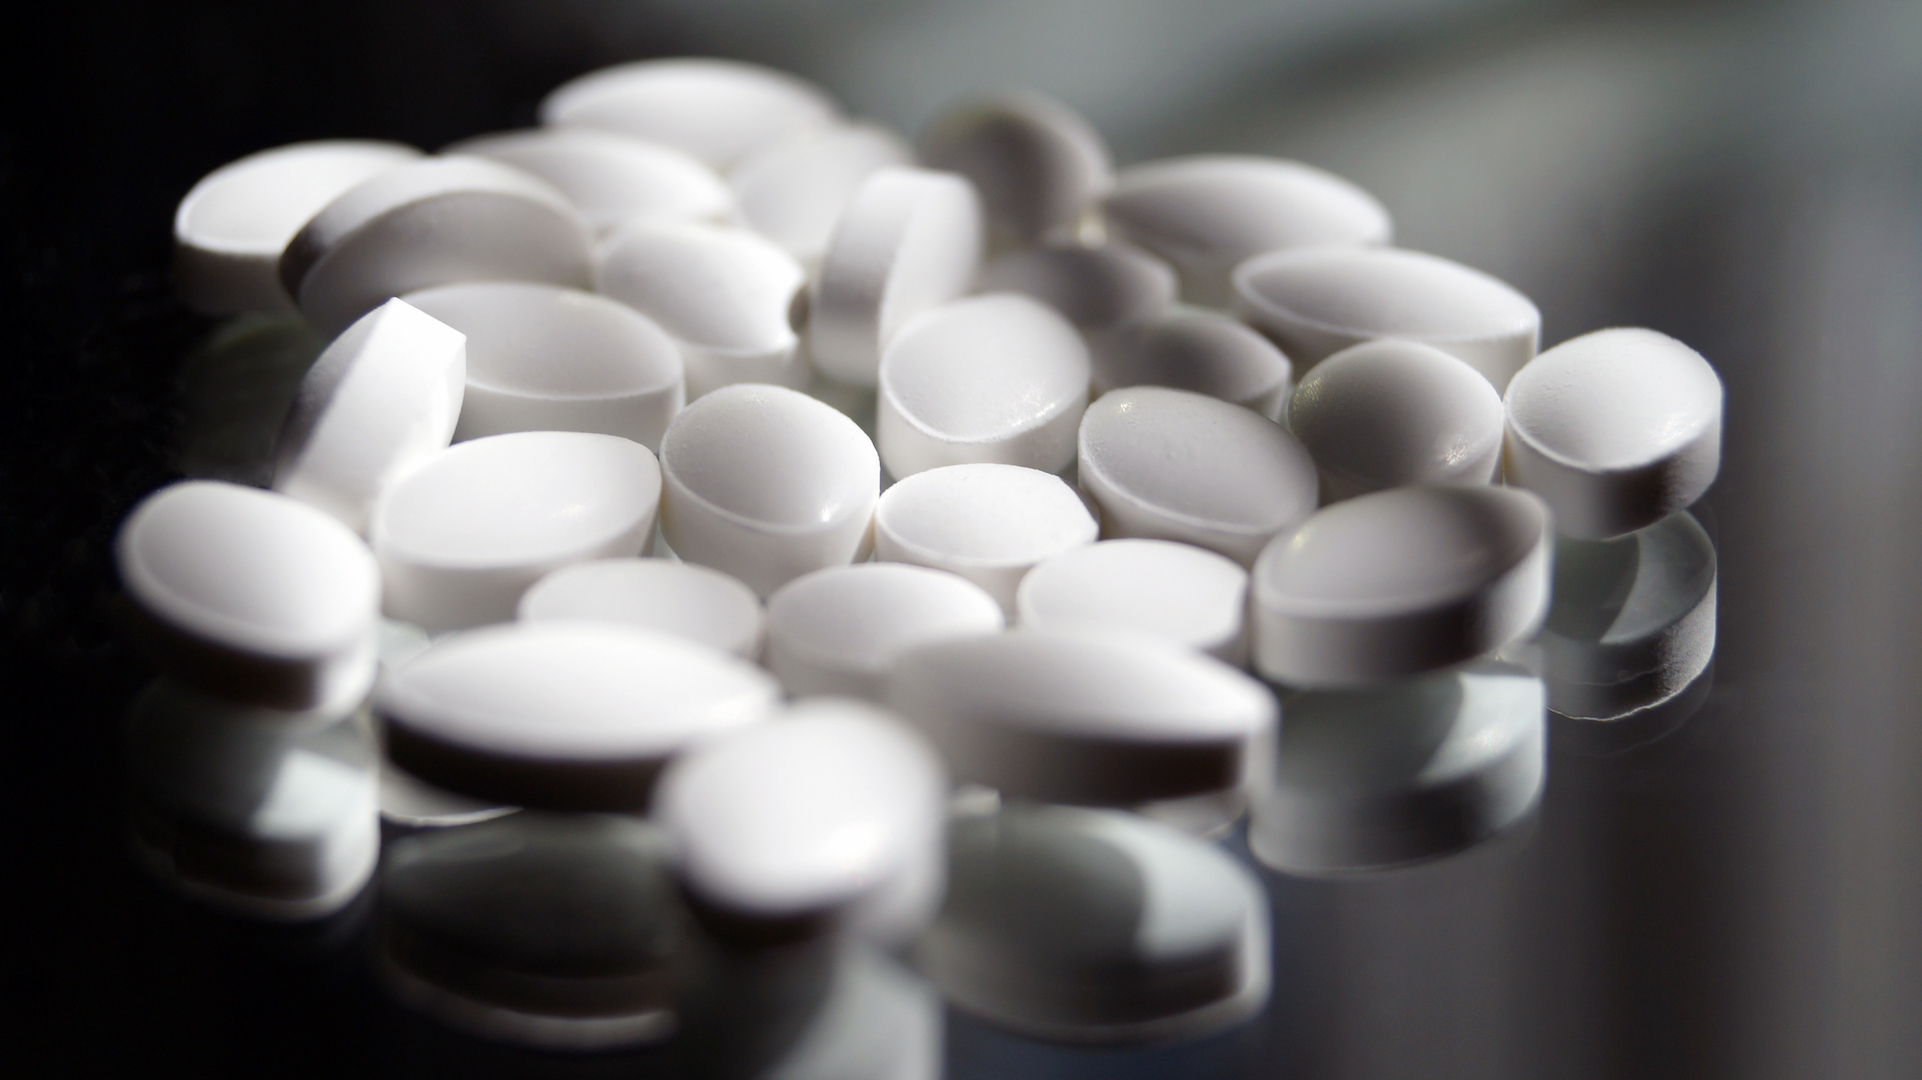 KSA blocks Lebanon attempt to smuggle 14.4 million Amphetamine pills